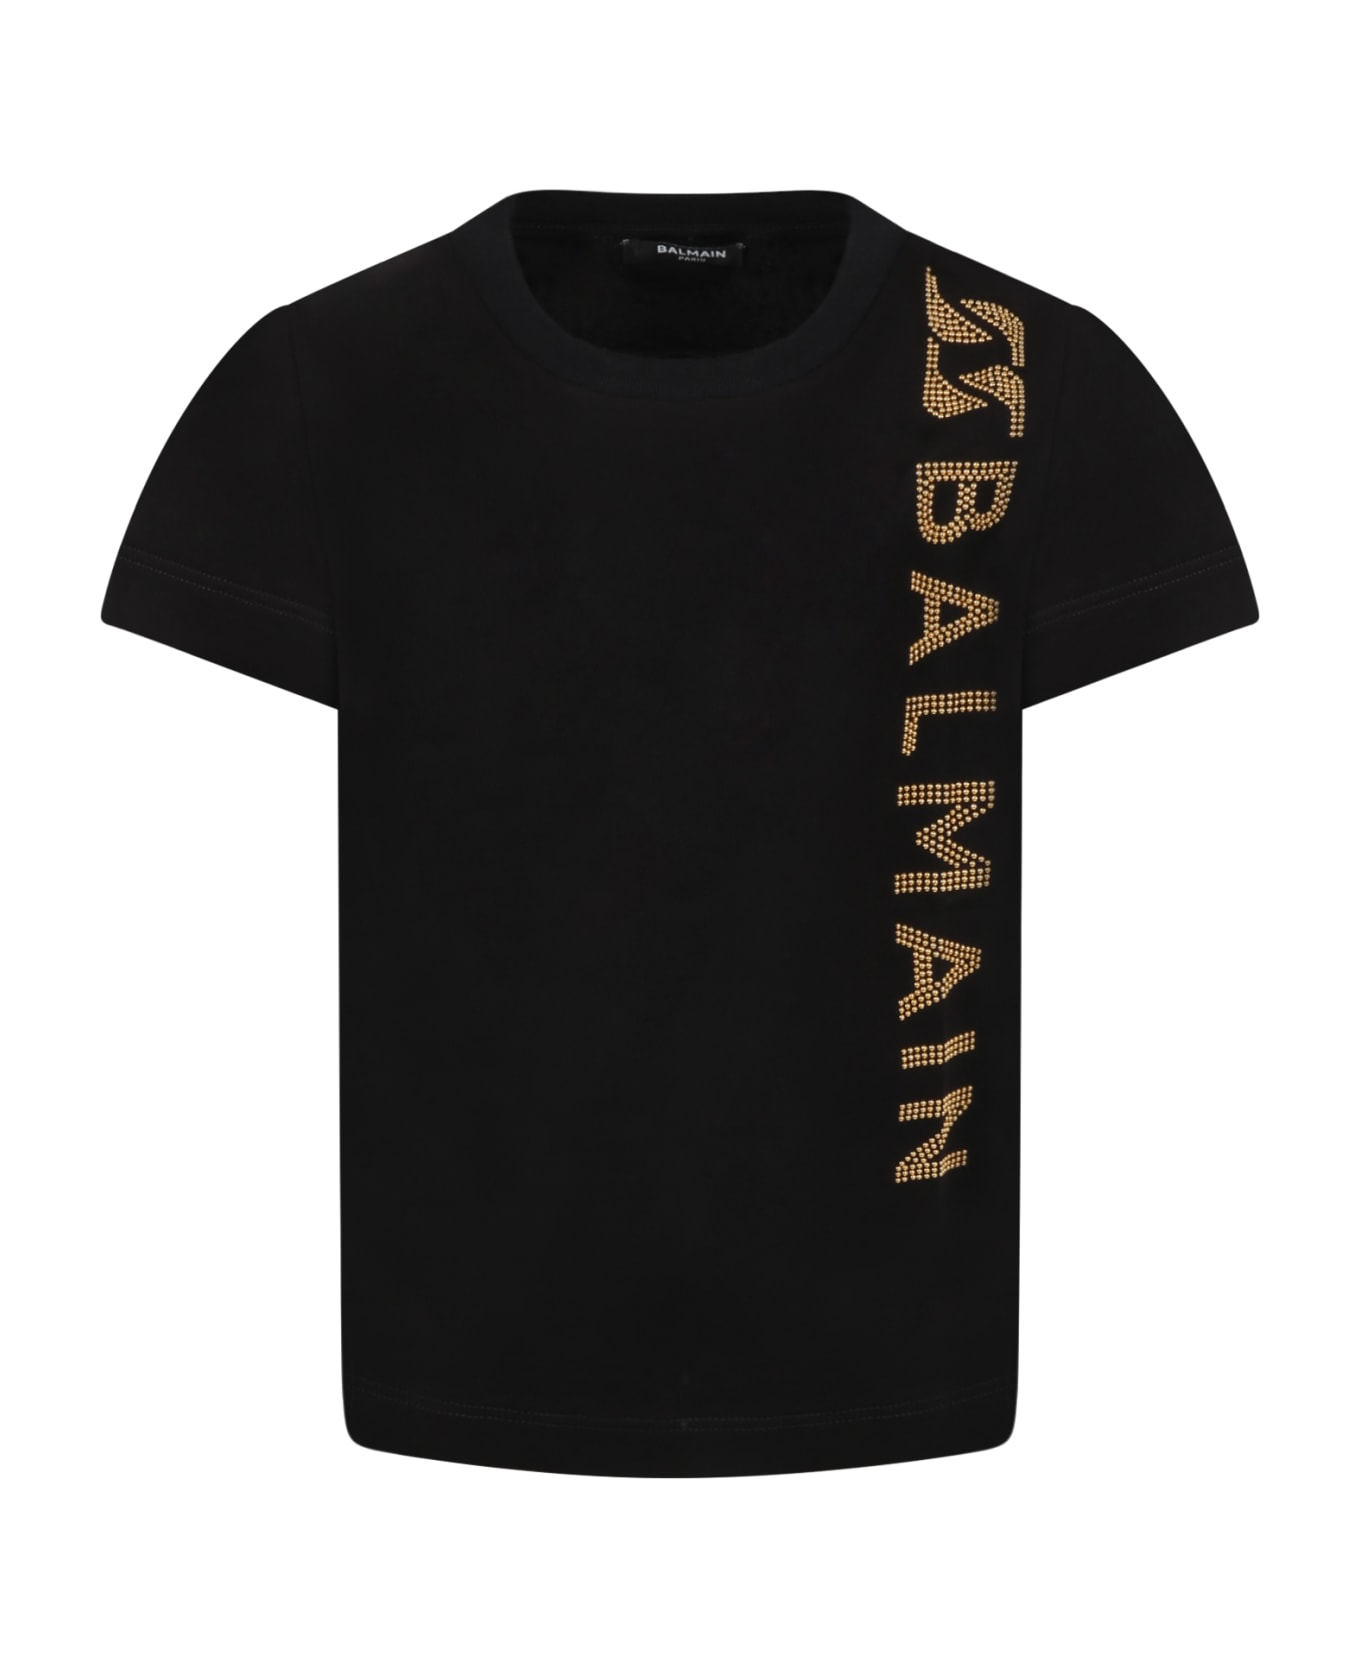 Balmain Black T-shirt Forr Kids With Studded Logo - Black